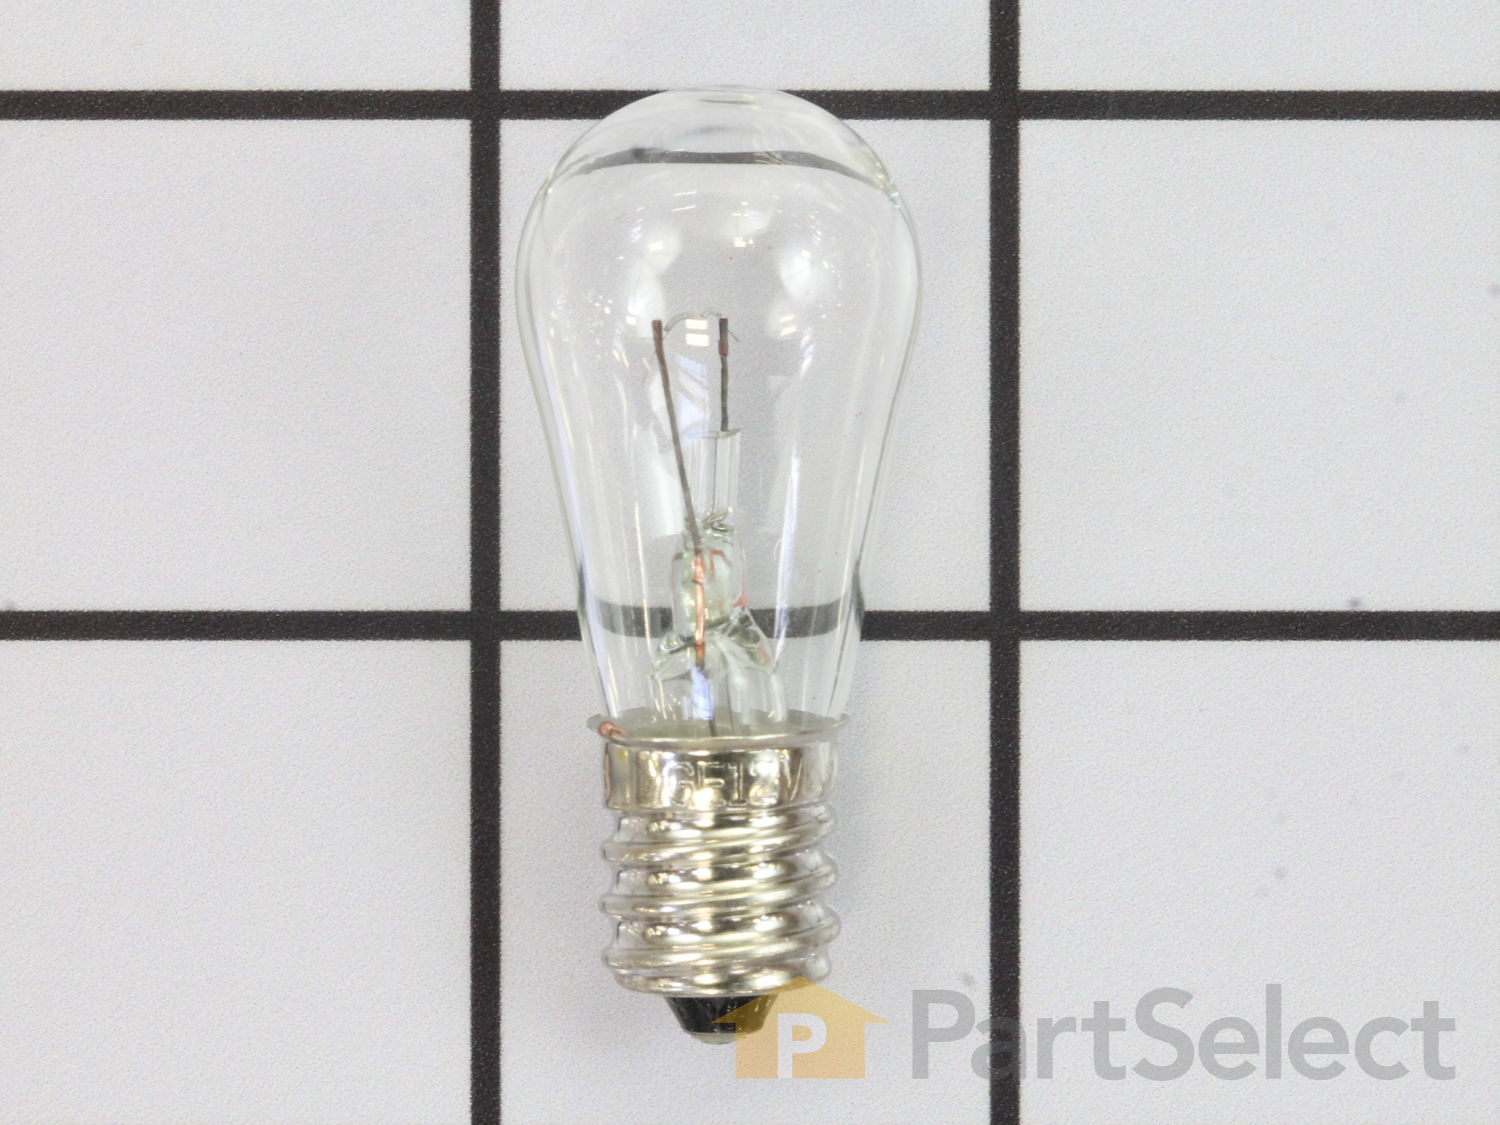 15+ Hotpoint refrigerator light bulb replacement ideas